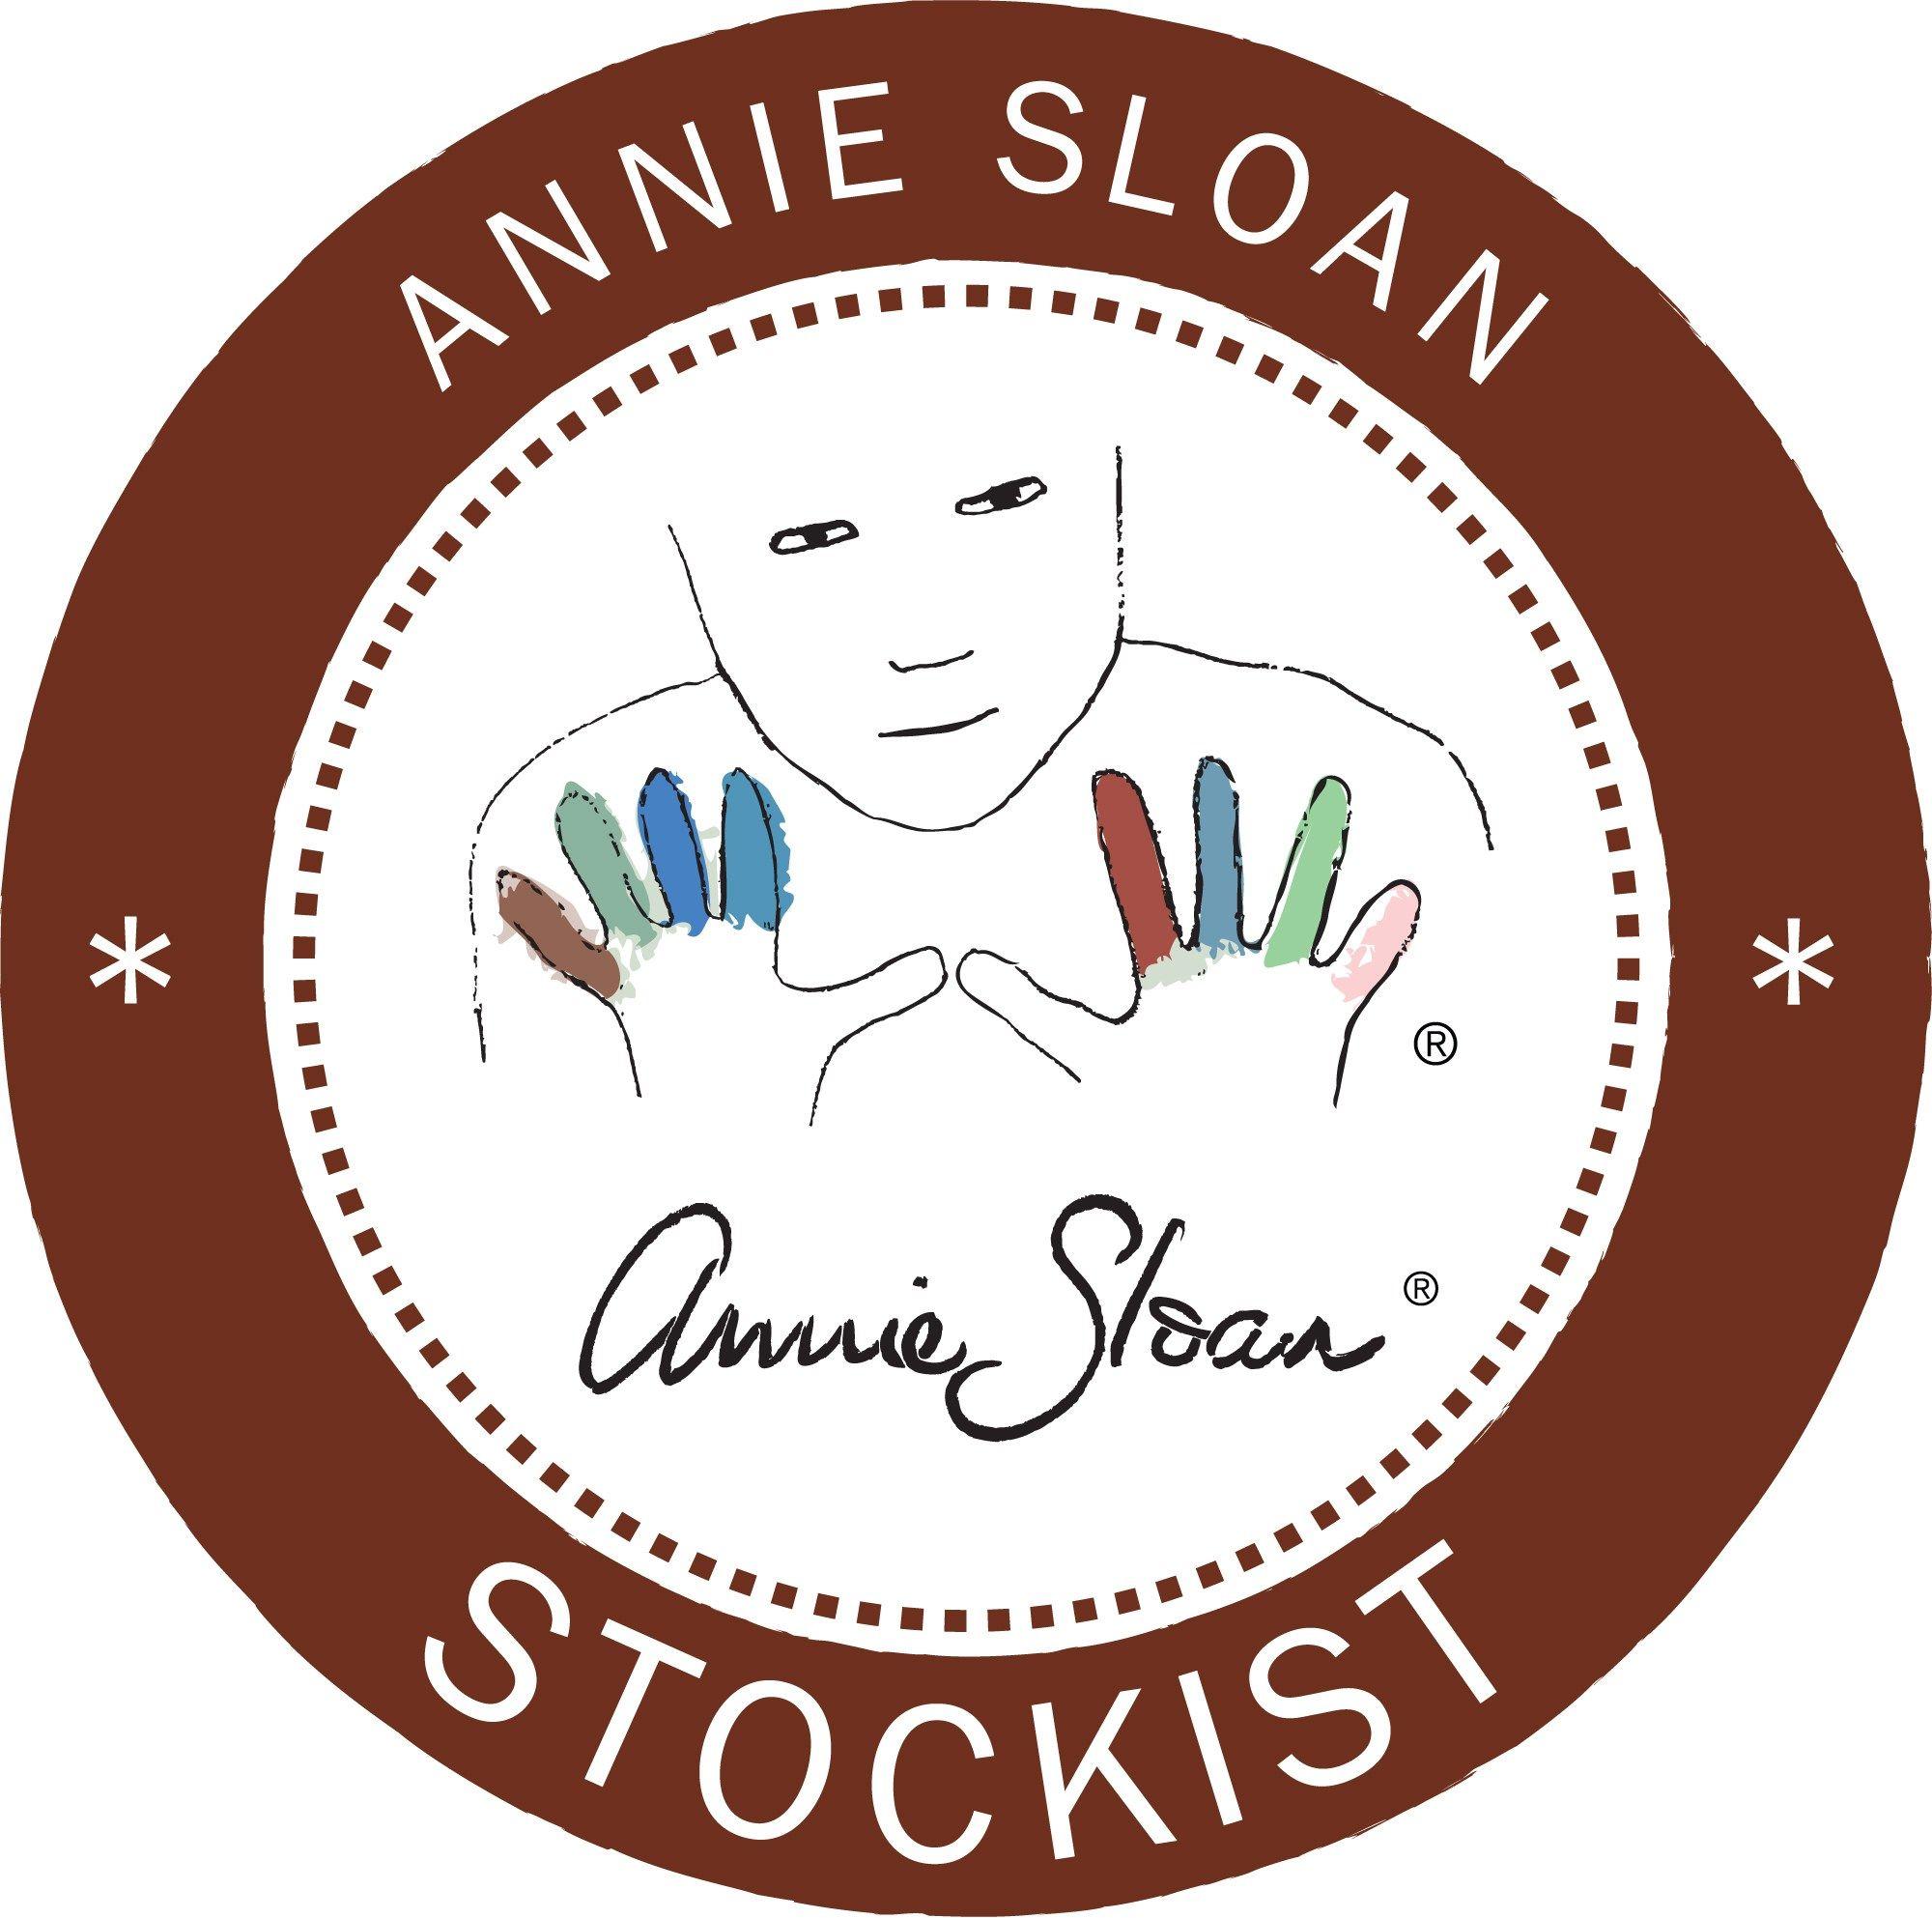 Red Hands Logo - Metheny Weir | Annie Sloan – Stockist logos – Hands – Primer Red